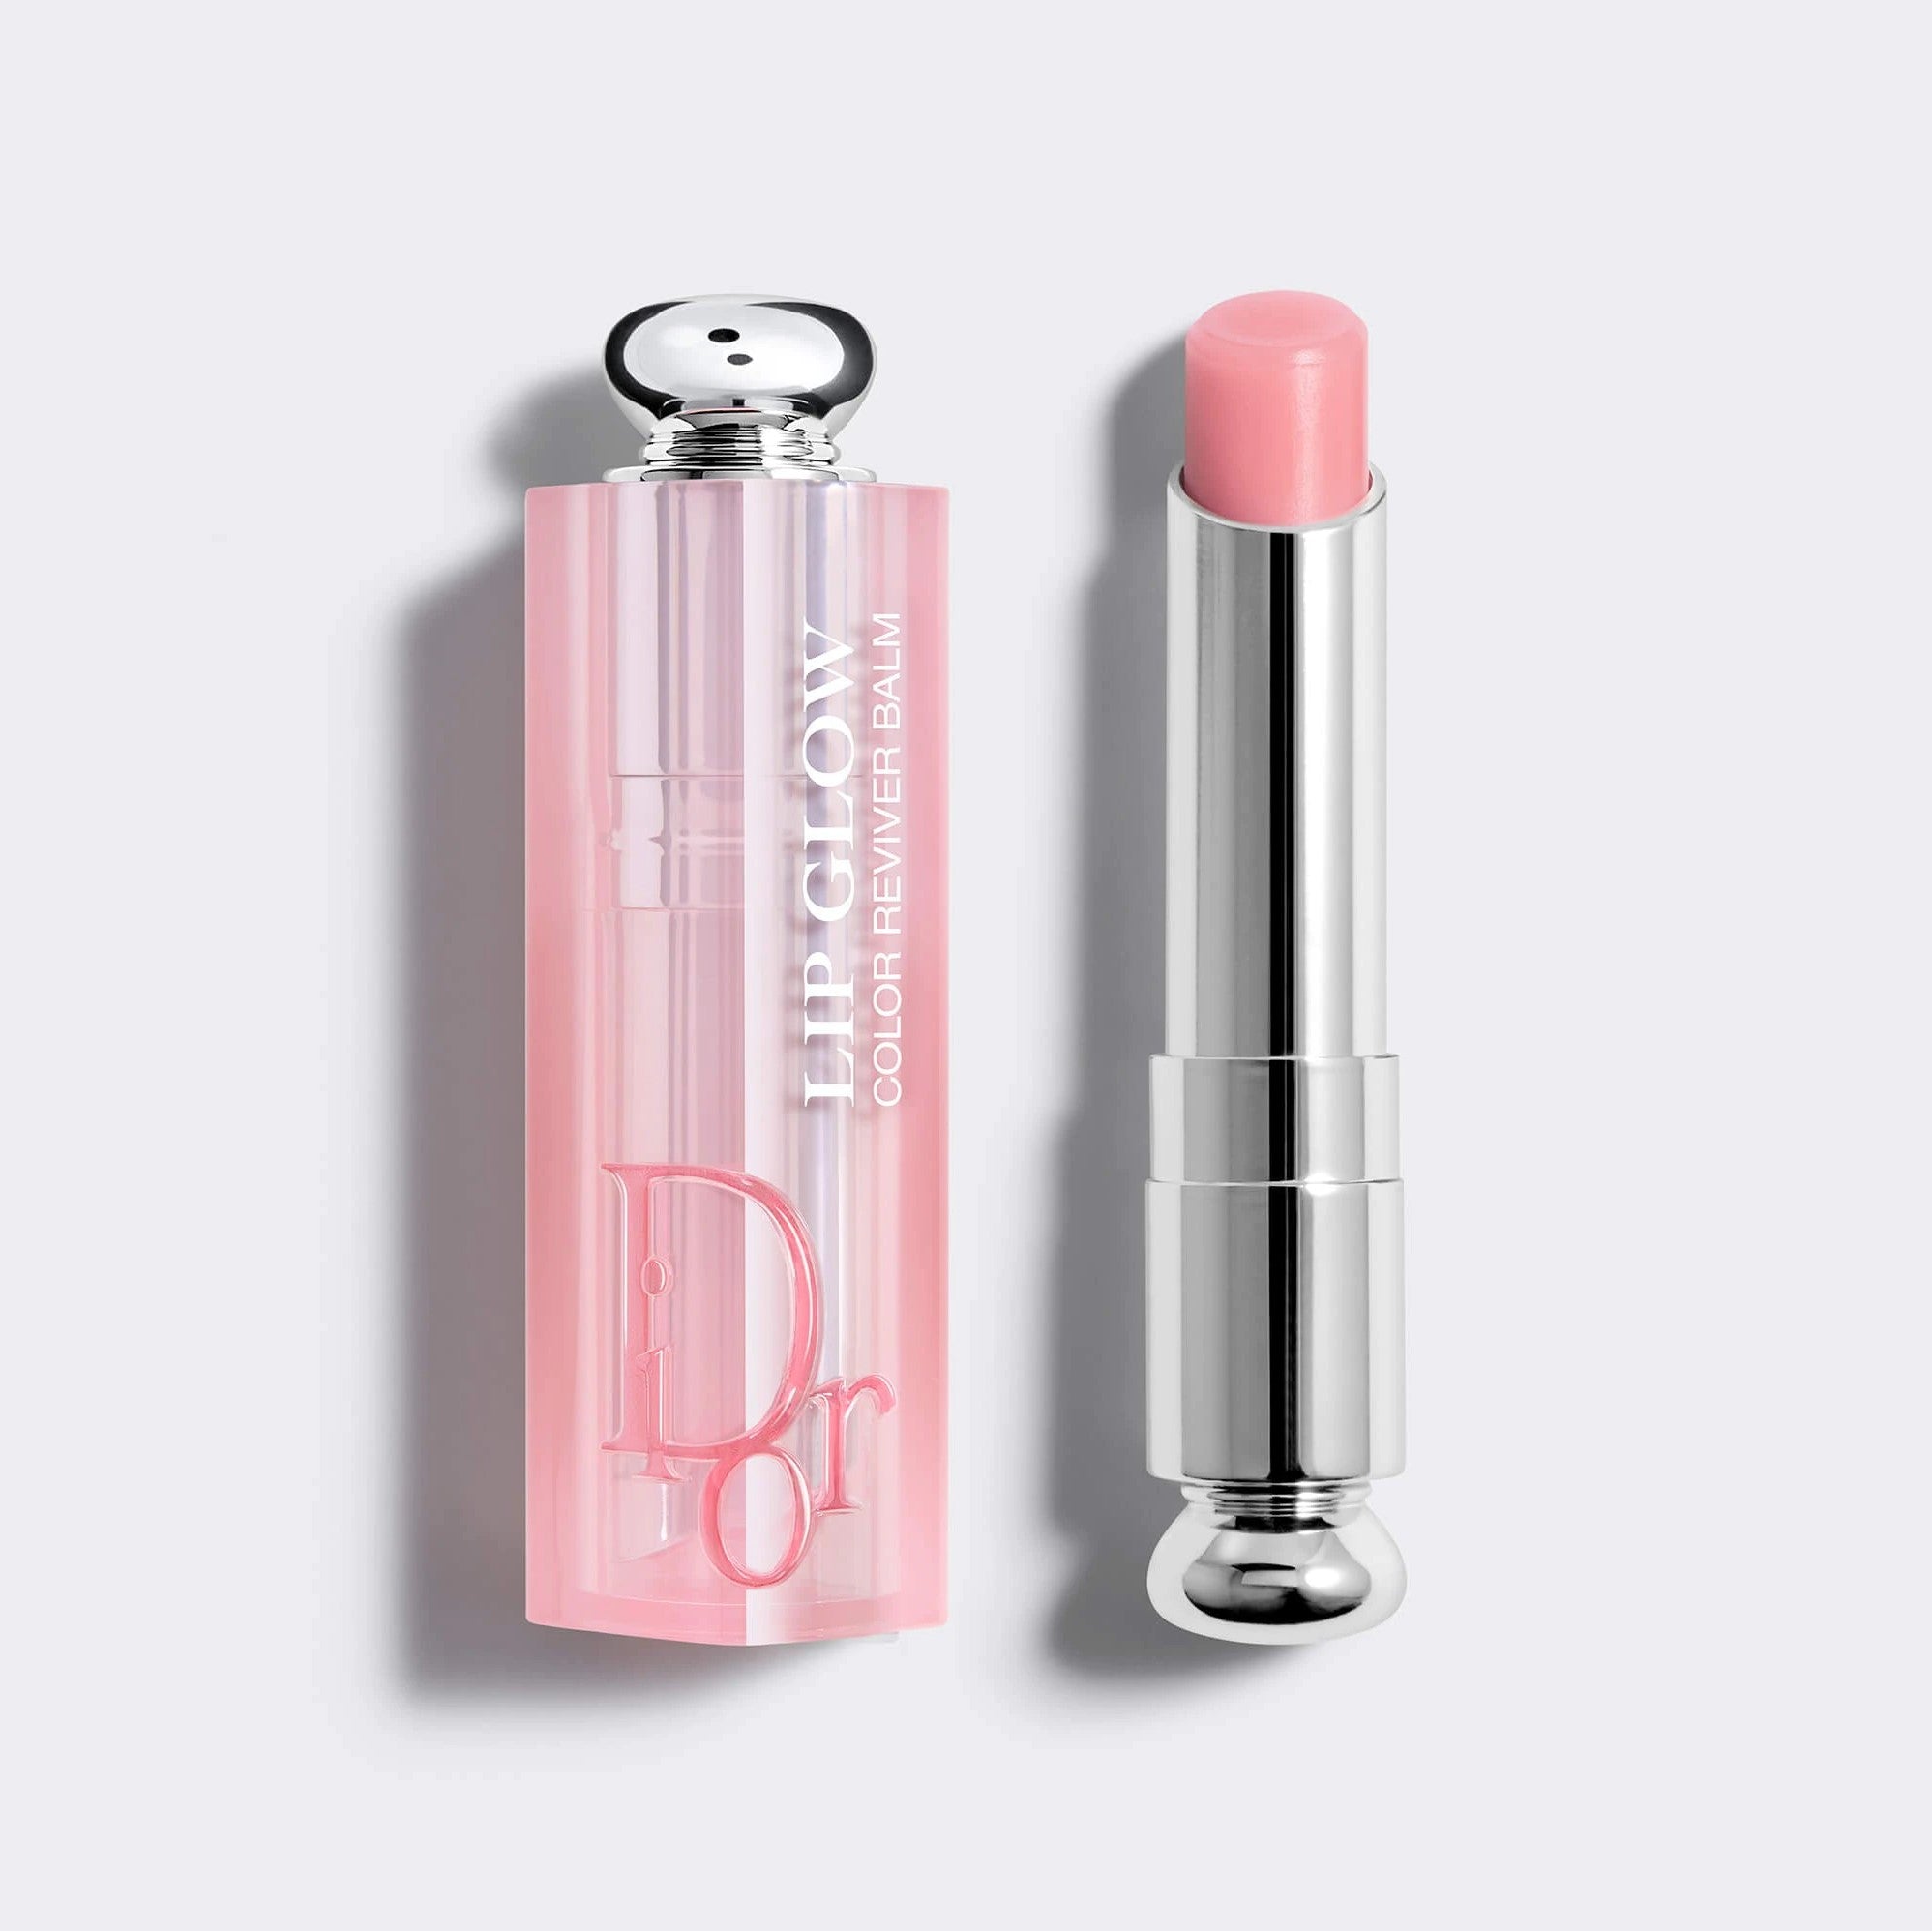 DIOR ADDICT LIP GLOW Color-Awakening Lip Balm 24h* Hydration 97% –  Dior Beauty Online Boutique Malaysia